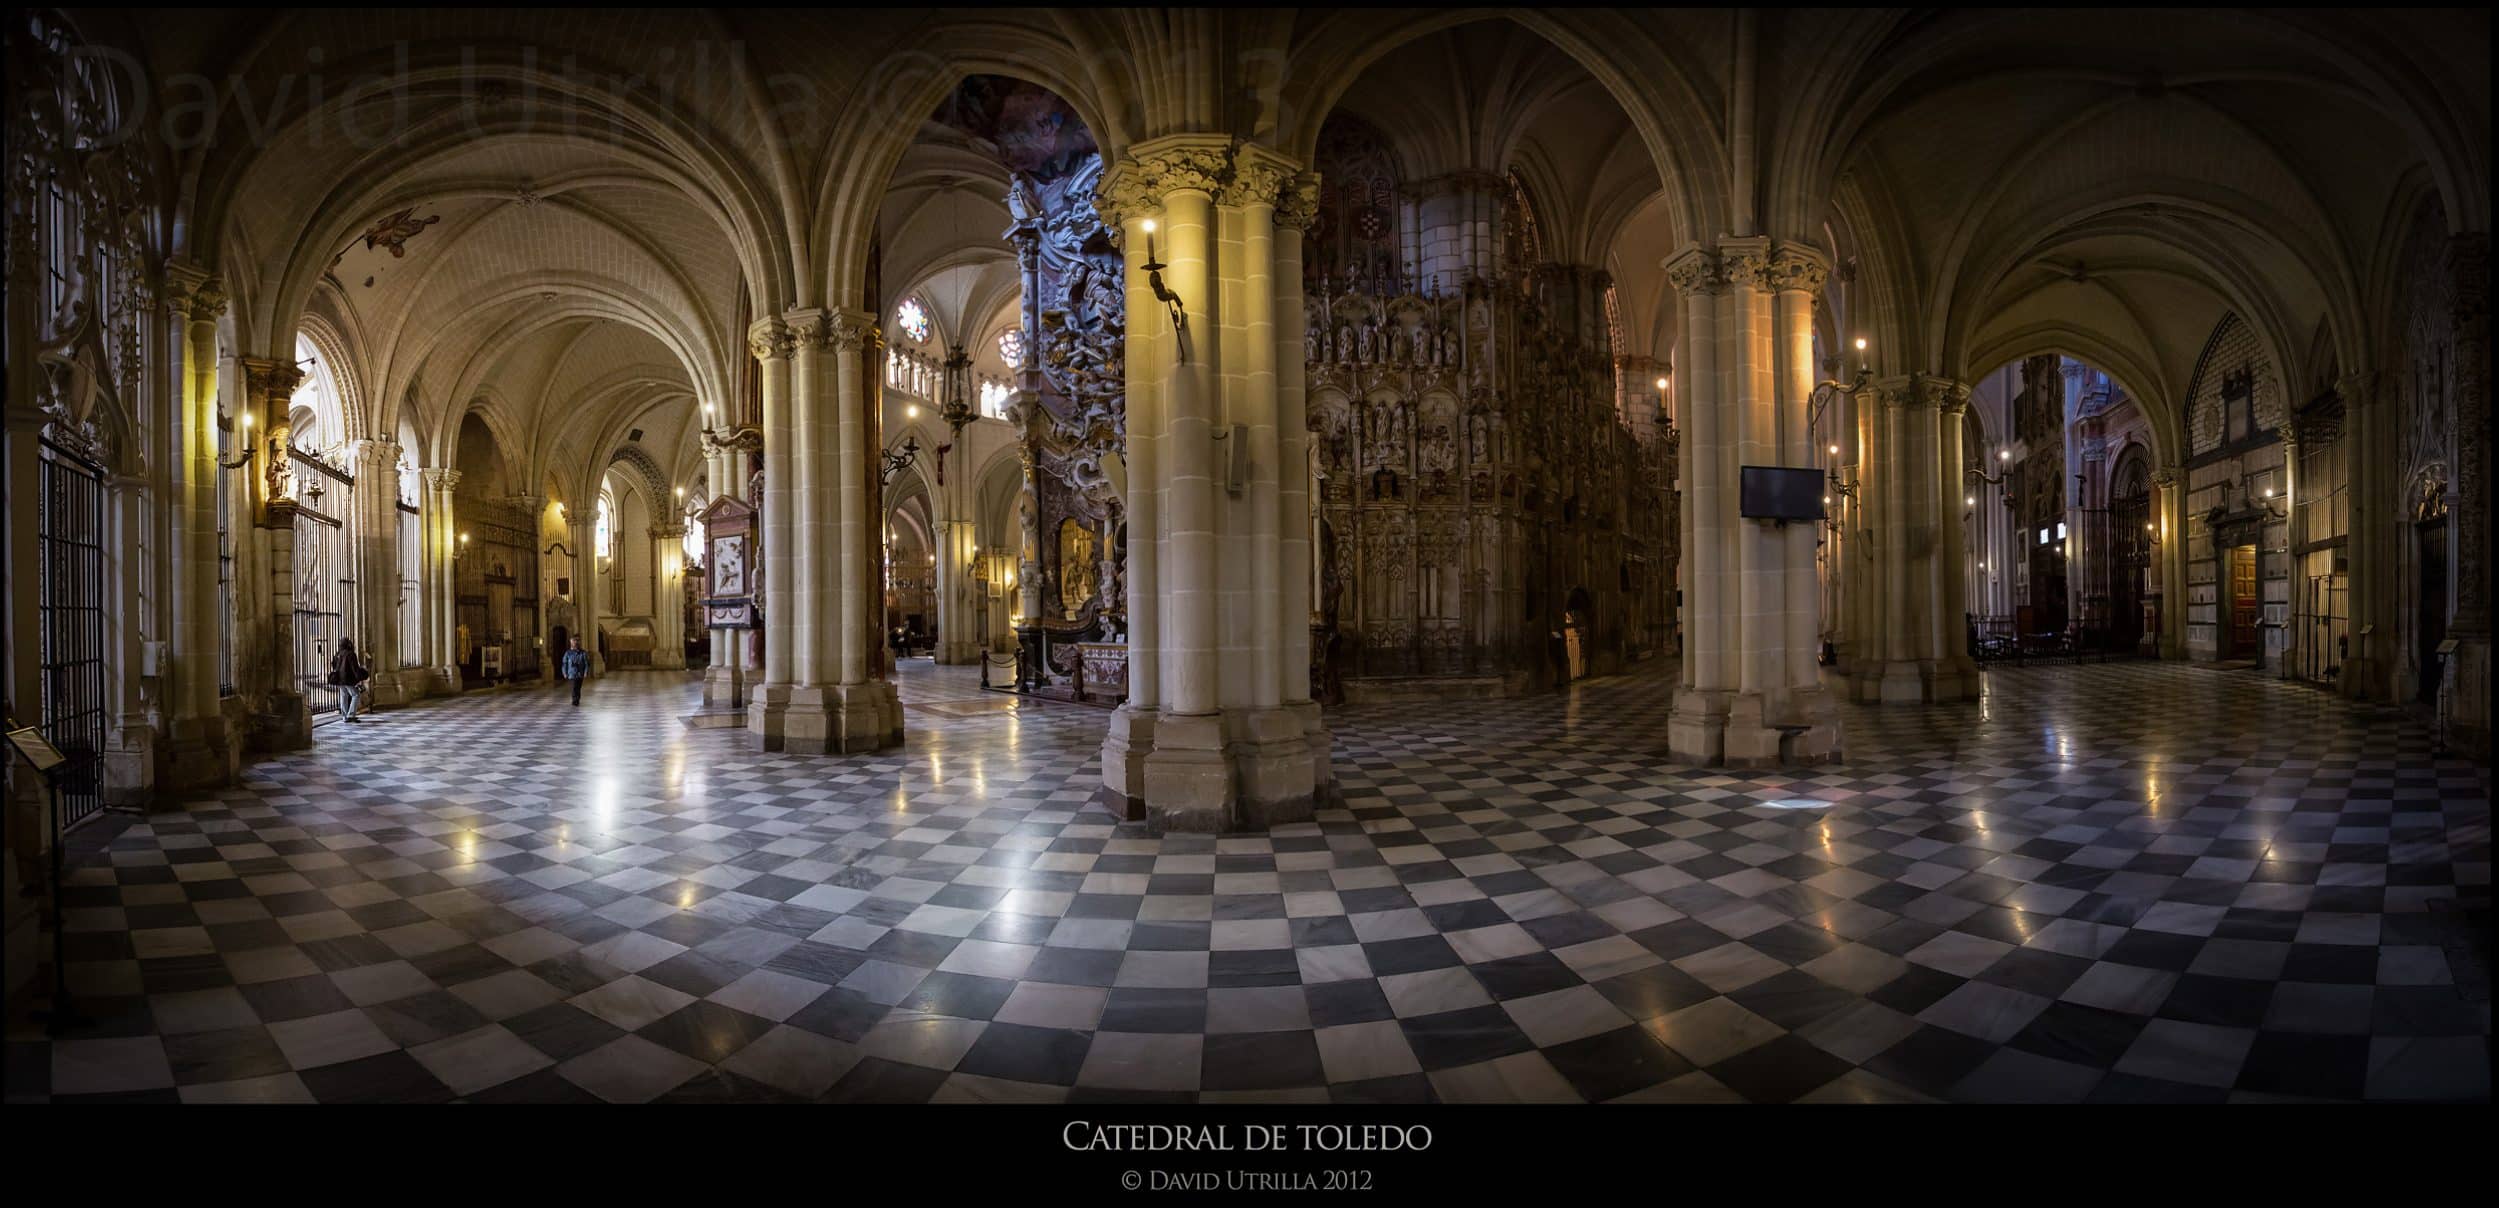 catedral 02 e1477305737606 - catedral_02 - Toledo Ap Alojamientos turísticos